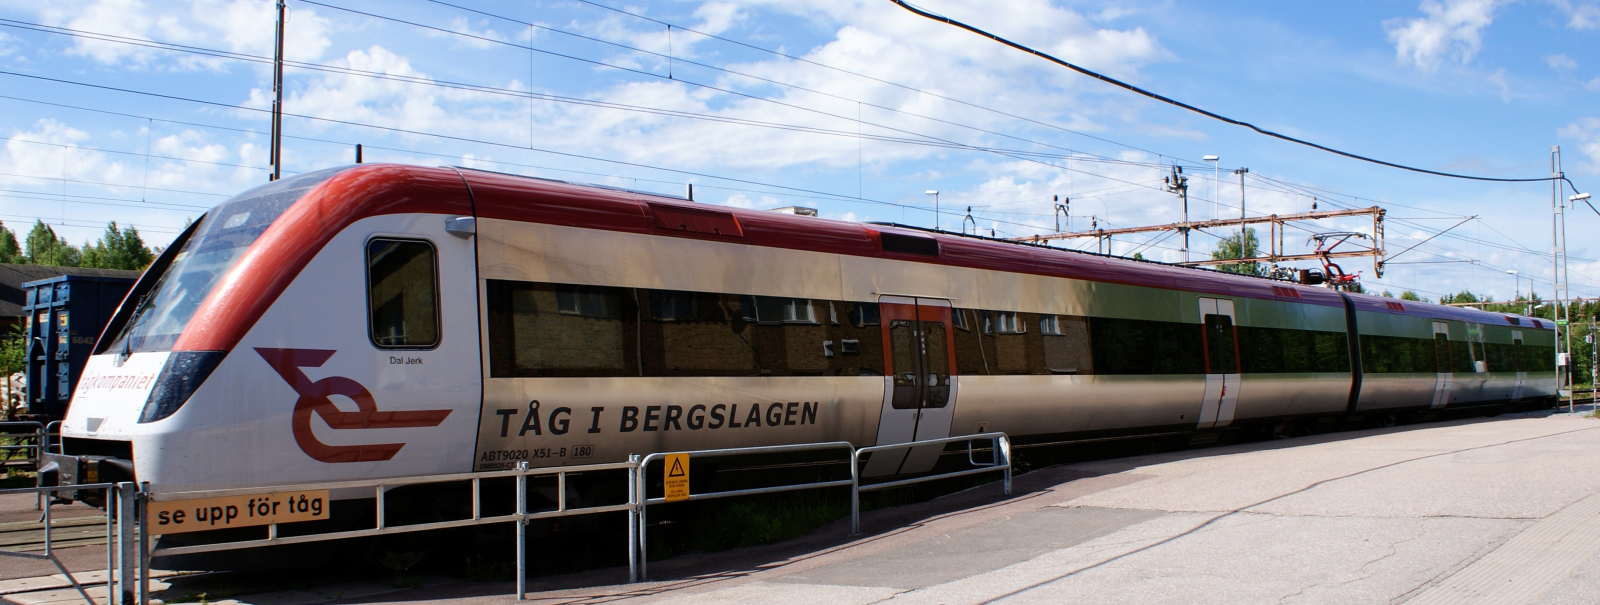 X51 of Tåg i Bergslagen in June 2010 at Hofors station